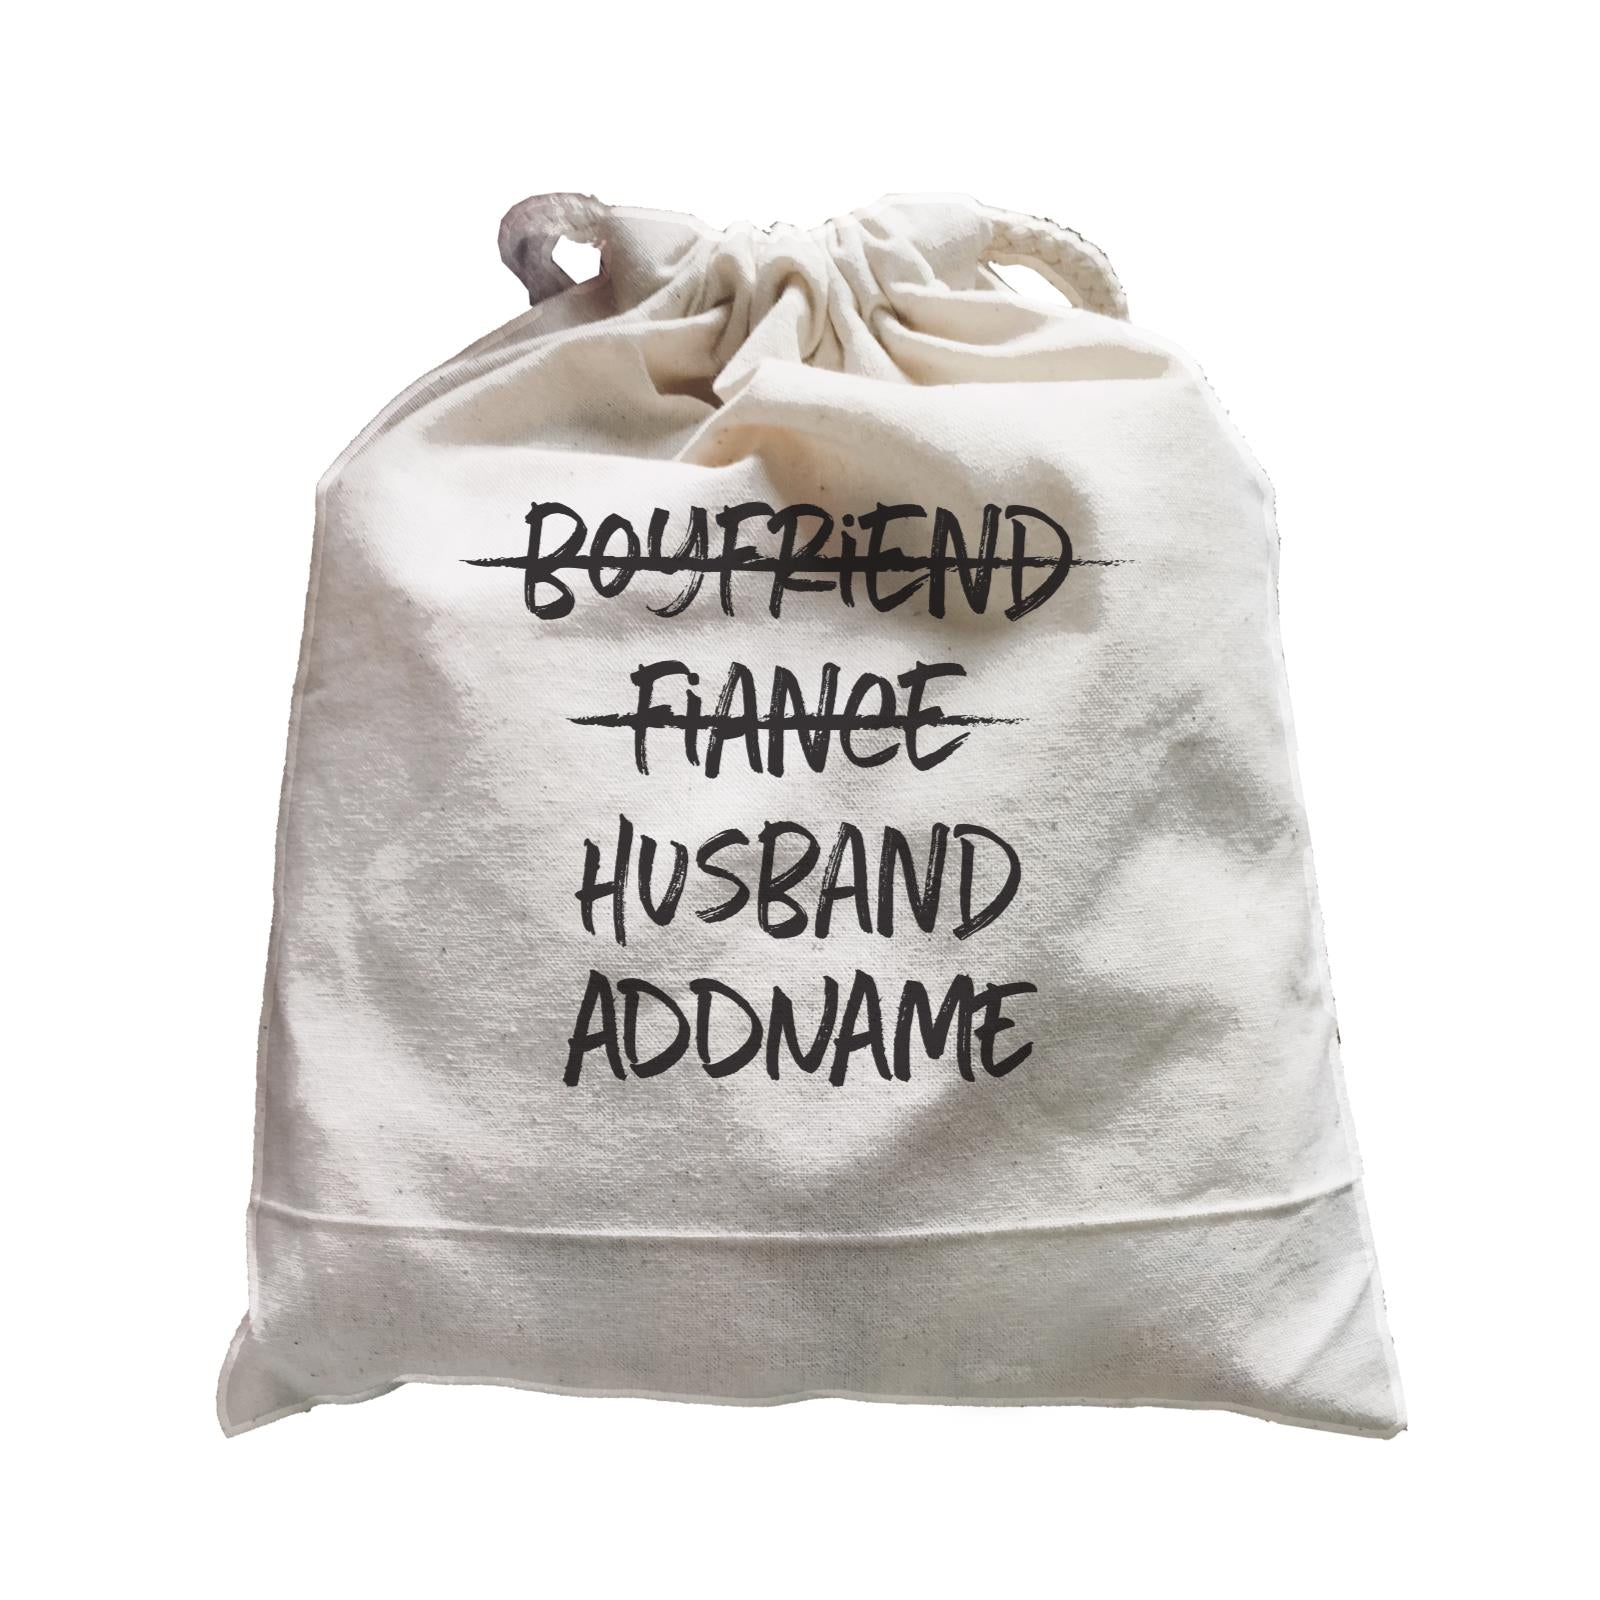 Husband and Wife Boyfriend Fiance Husband Addname Satchel